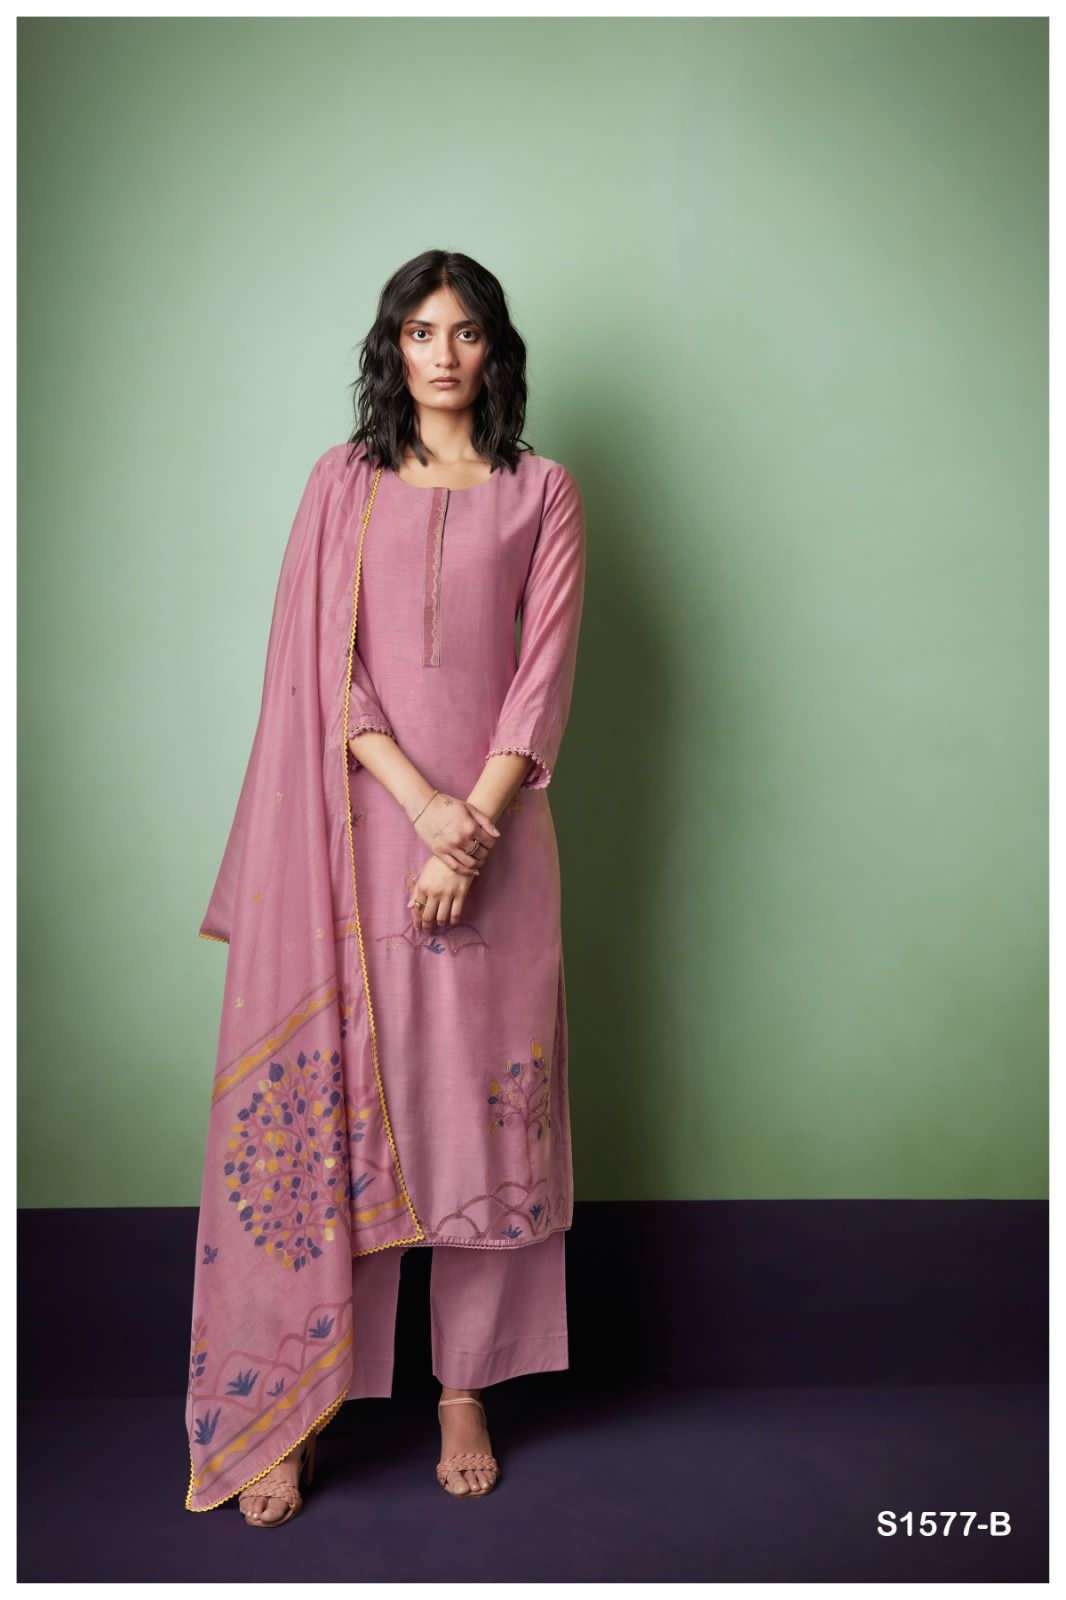 Ganga Zumkha 290 Four Habutai Silk Embroidery Work Suit Catalog